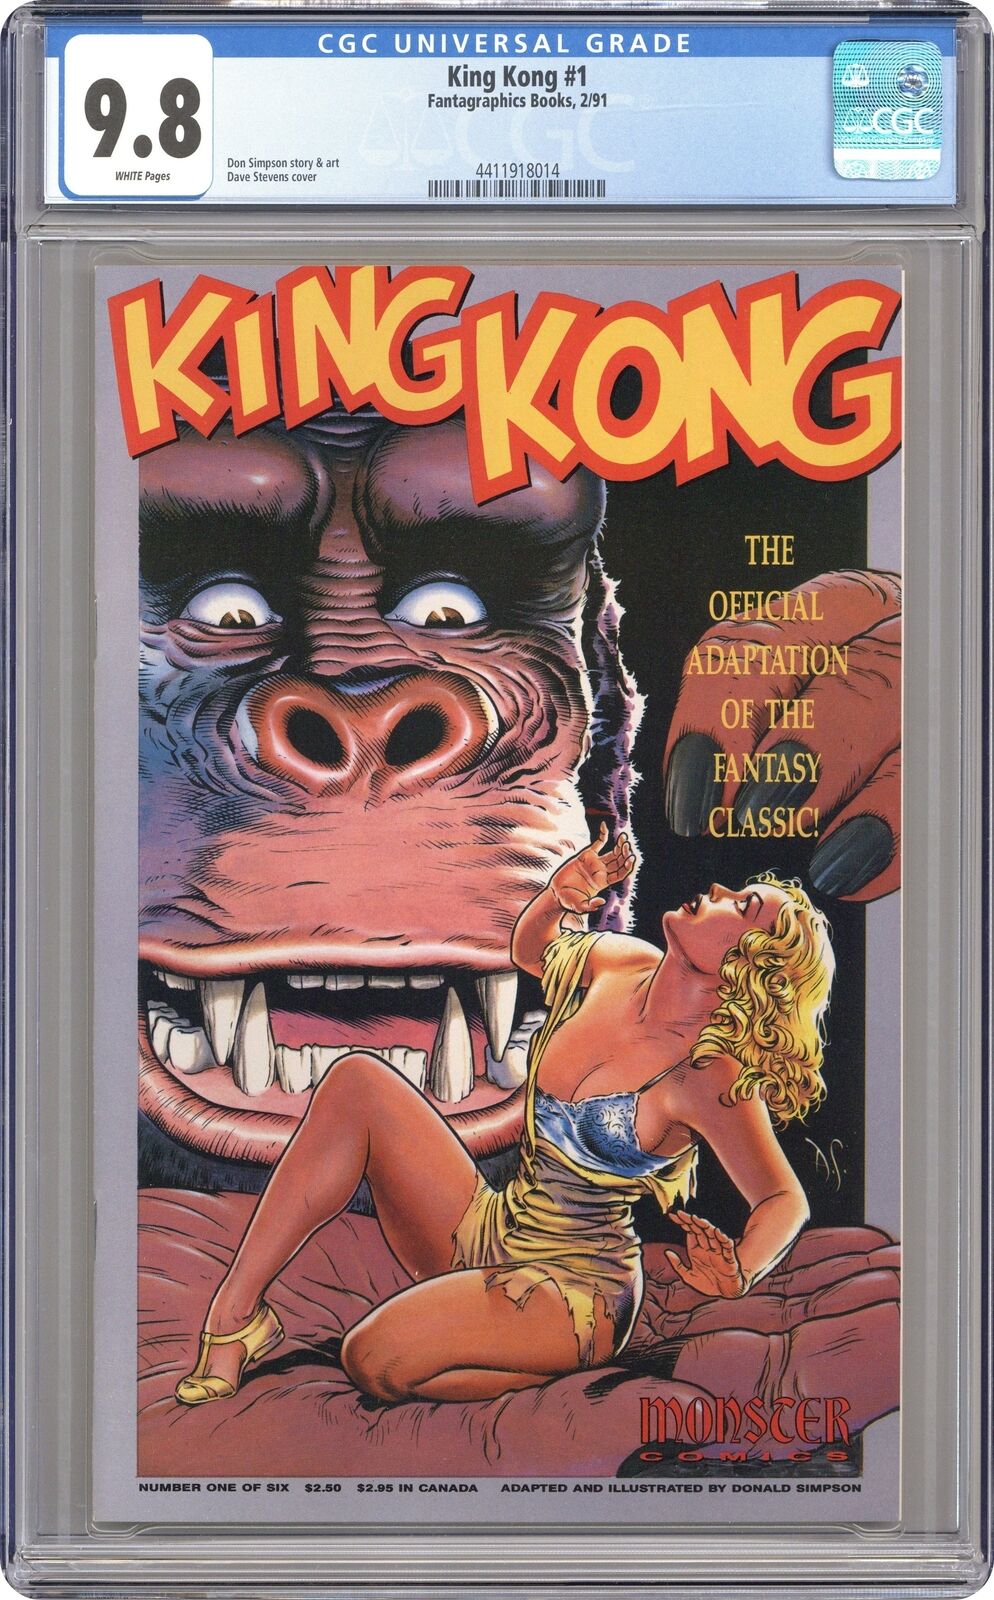 King Kong #1 CGC 9.8 1991 4411918014